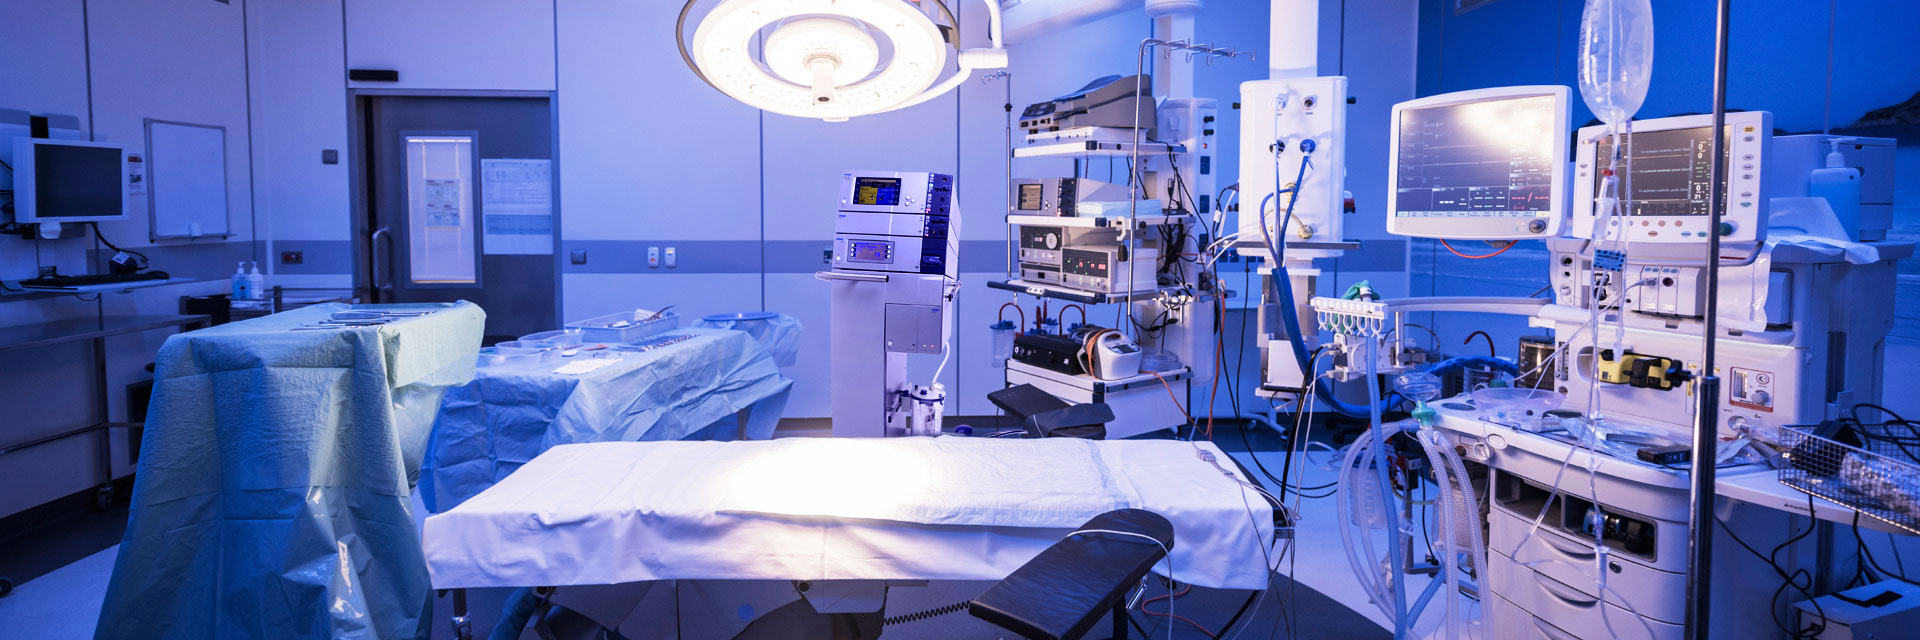 Operating Room Technology from Strickler Medical